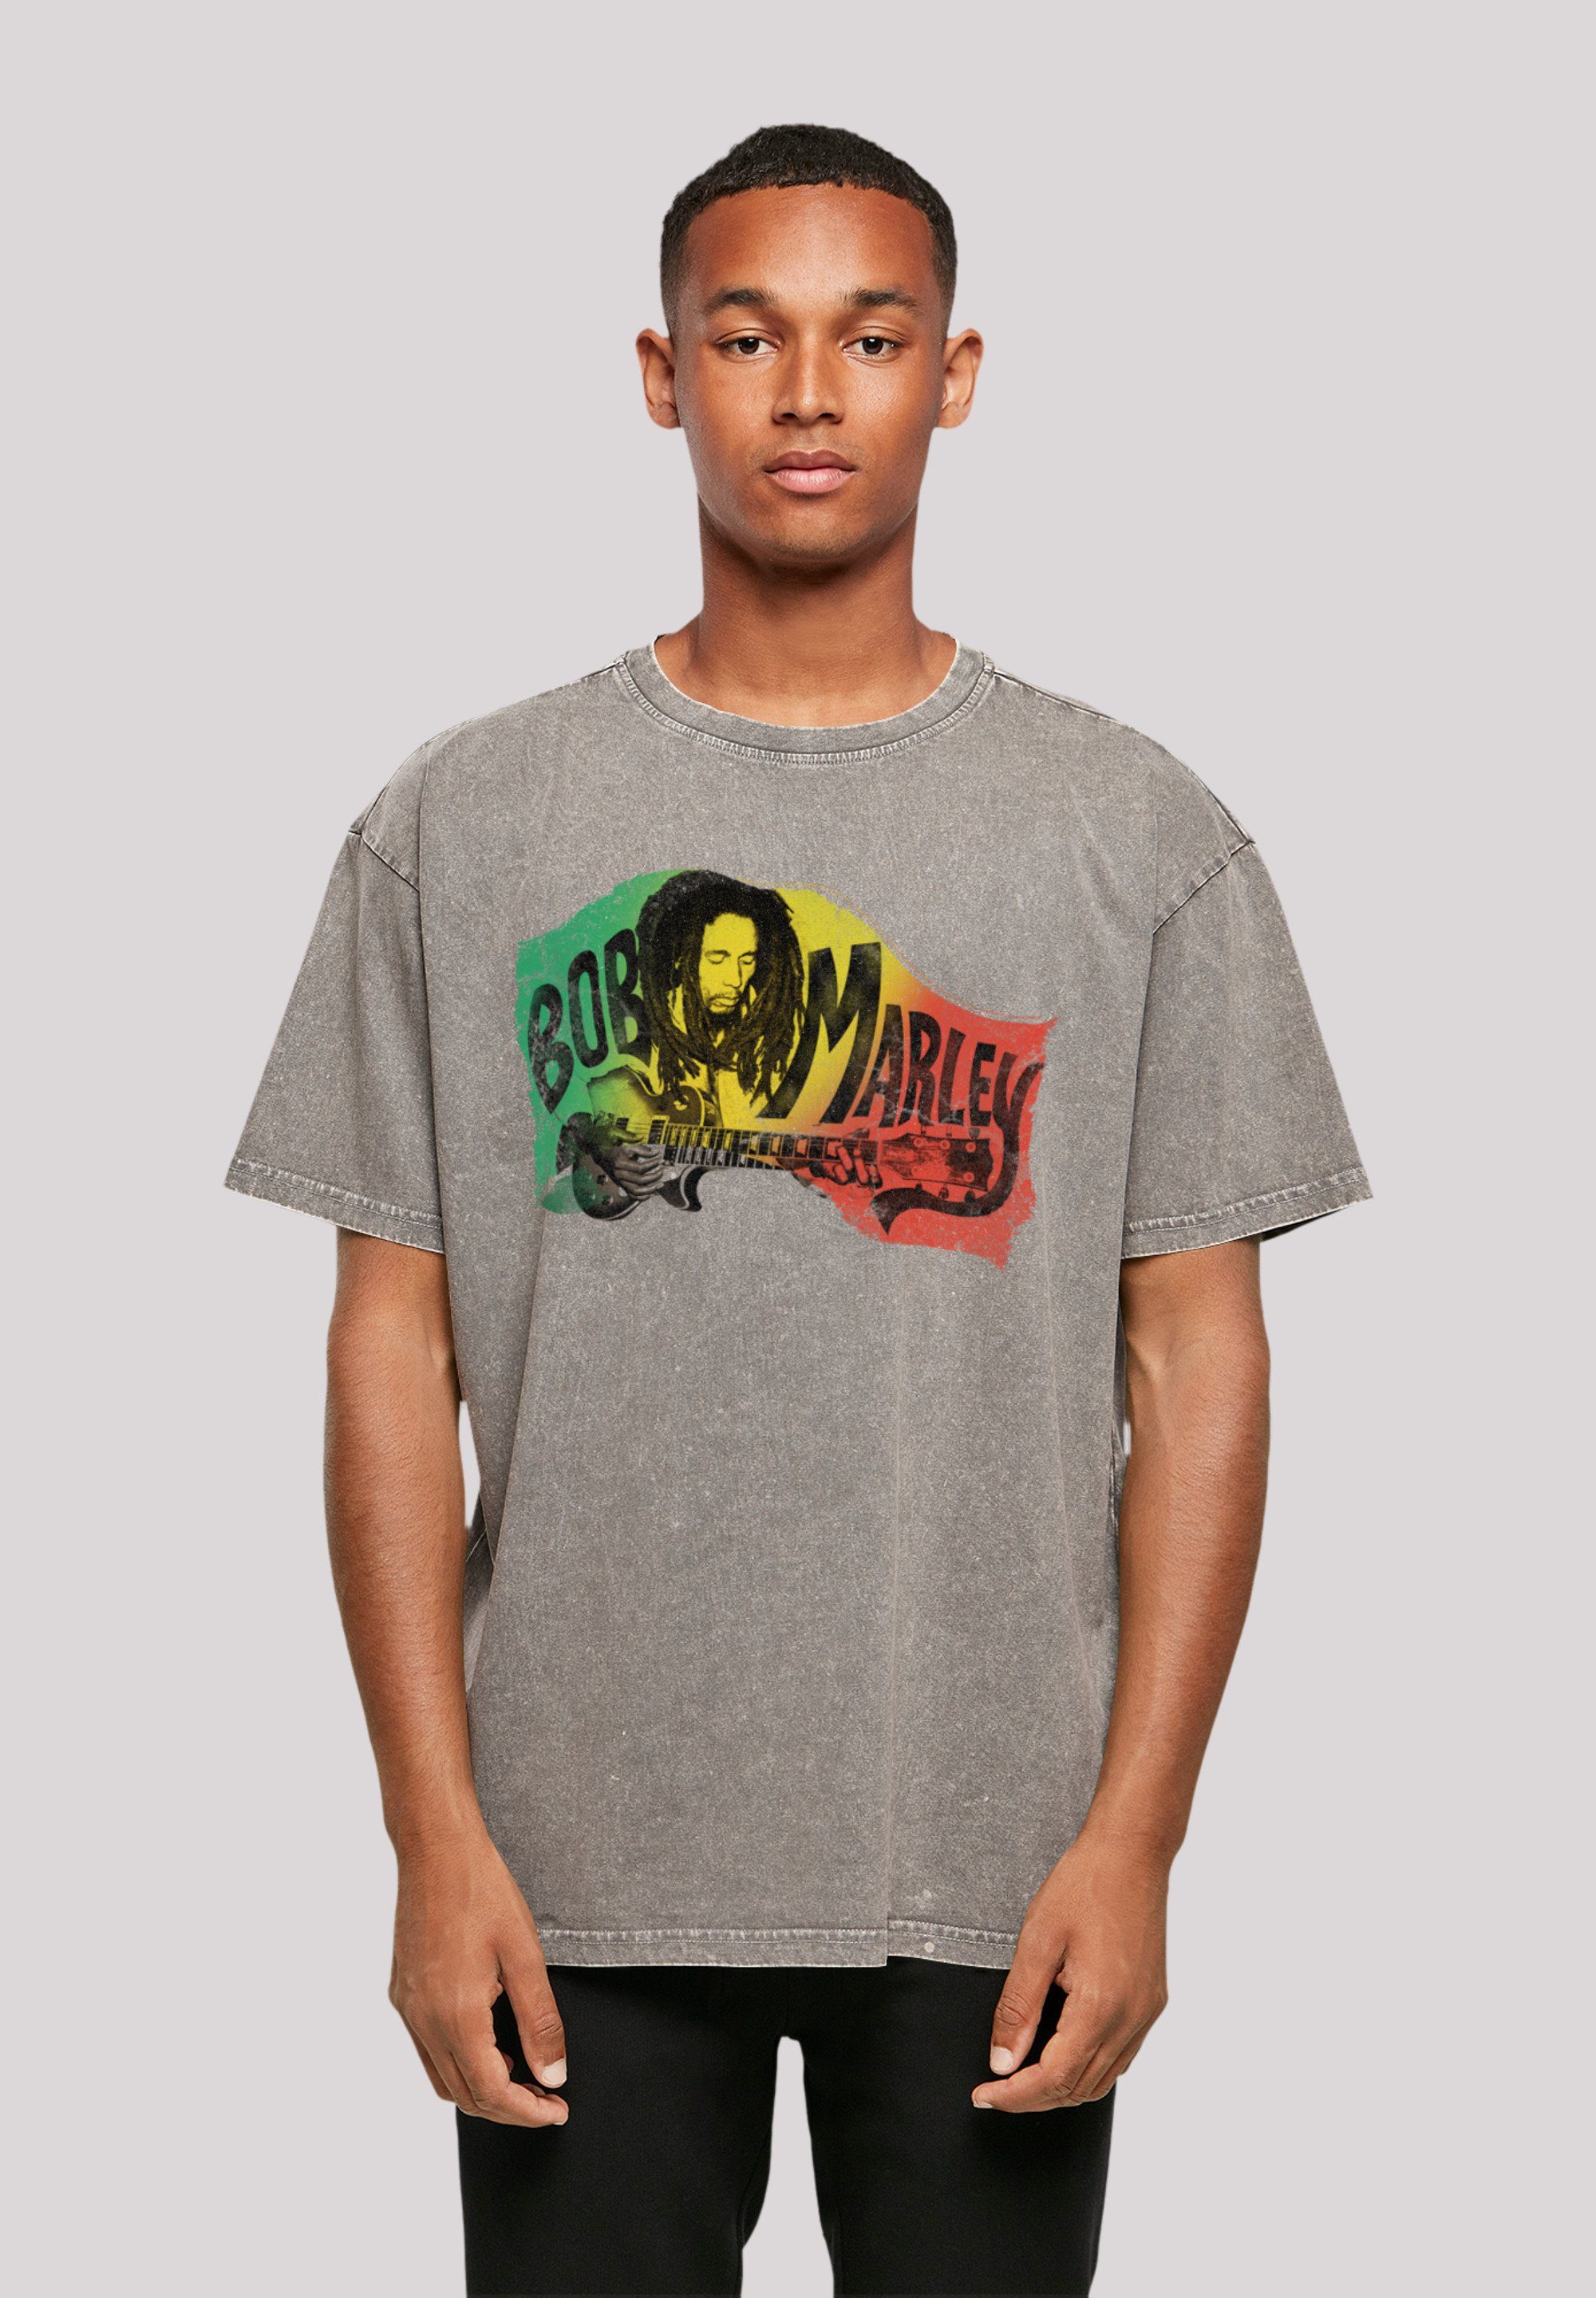 Qualität, Premium Off T-Shirt F4NT4STIC Bob By Musik, Marley Chords Reggae Music Asphalt Rock